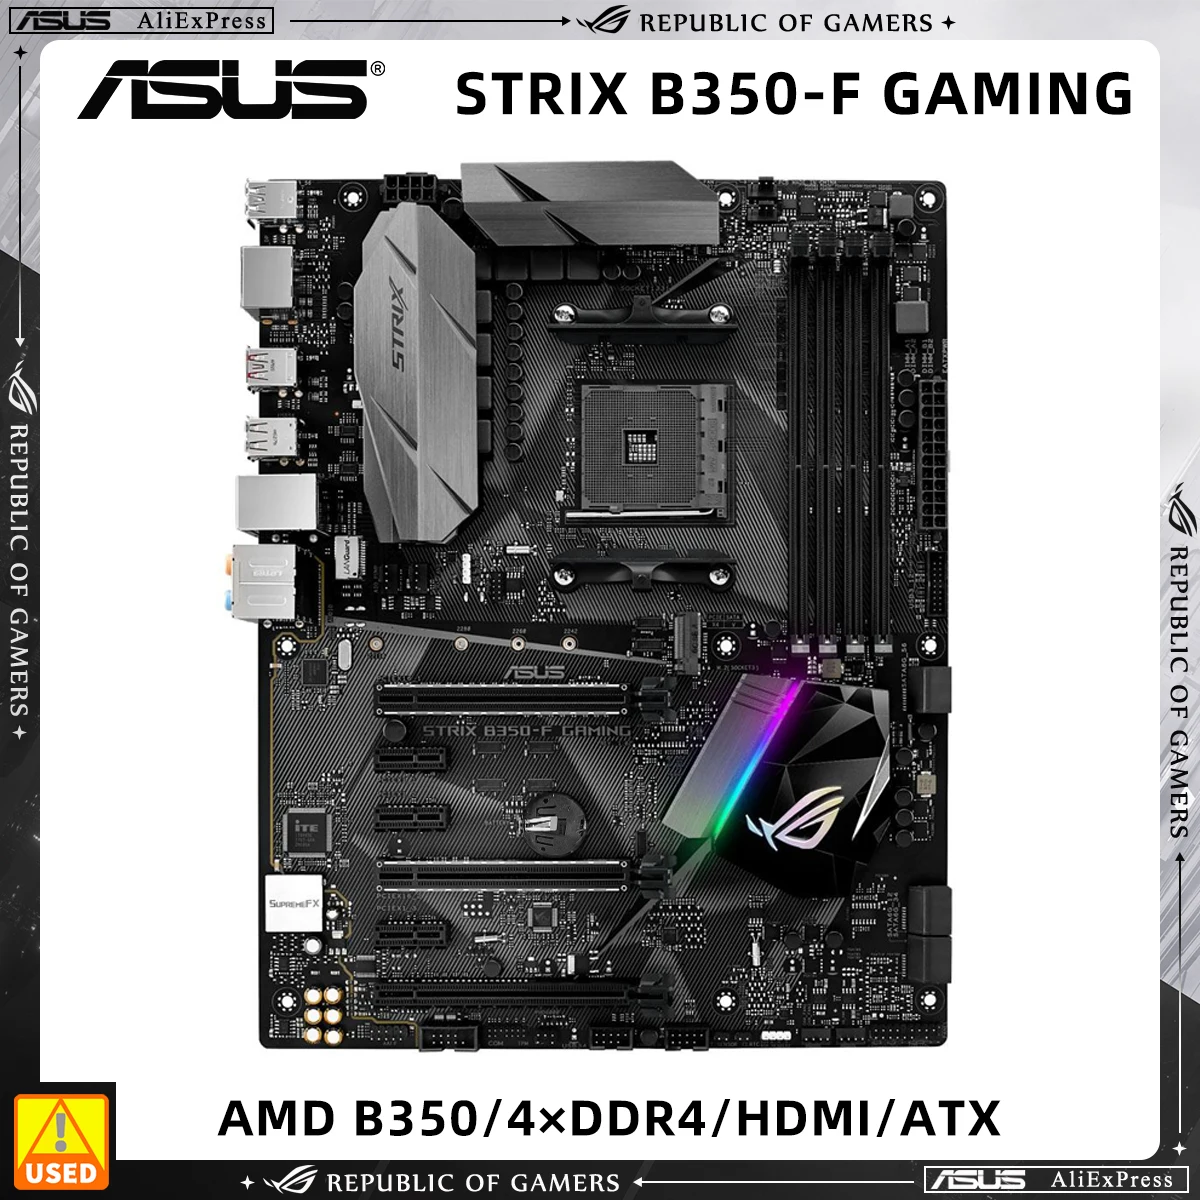 

AMD B350 Motherboard ASUS STRIX B350-F GAMING Socket AM4 DDR4 64GB For AMD Ryzen/7th Gen CPU USB3.1 PCI-E 3.0 M.2 HDMI ATX